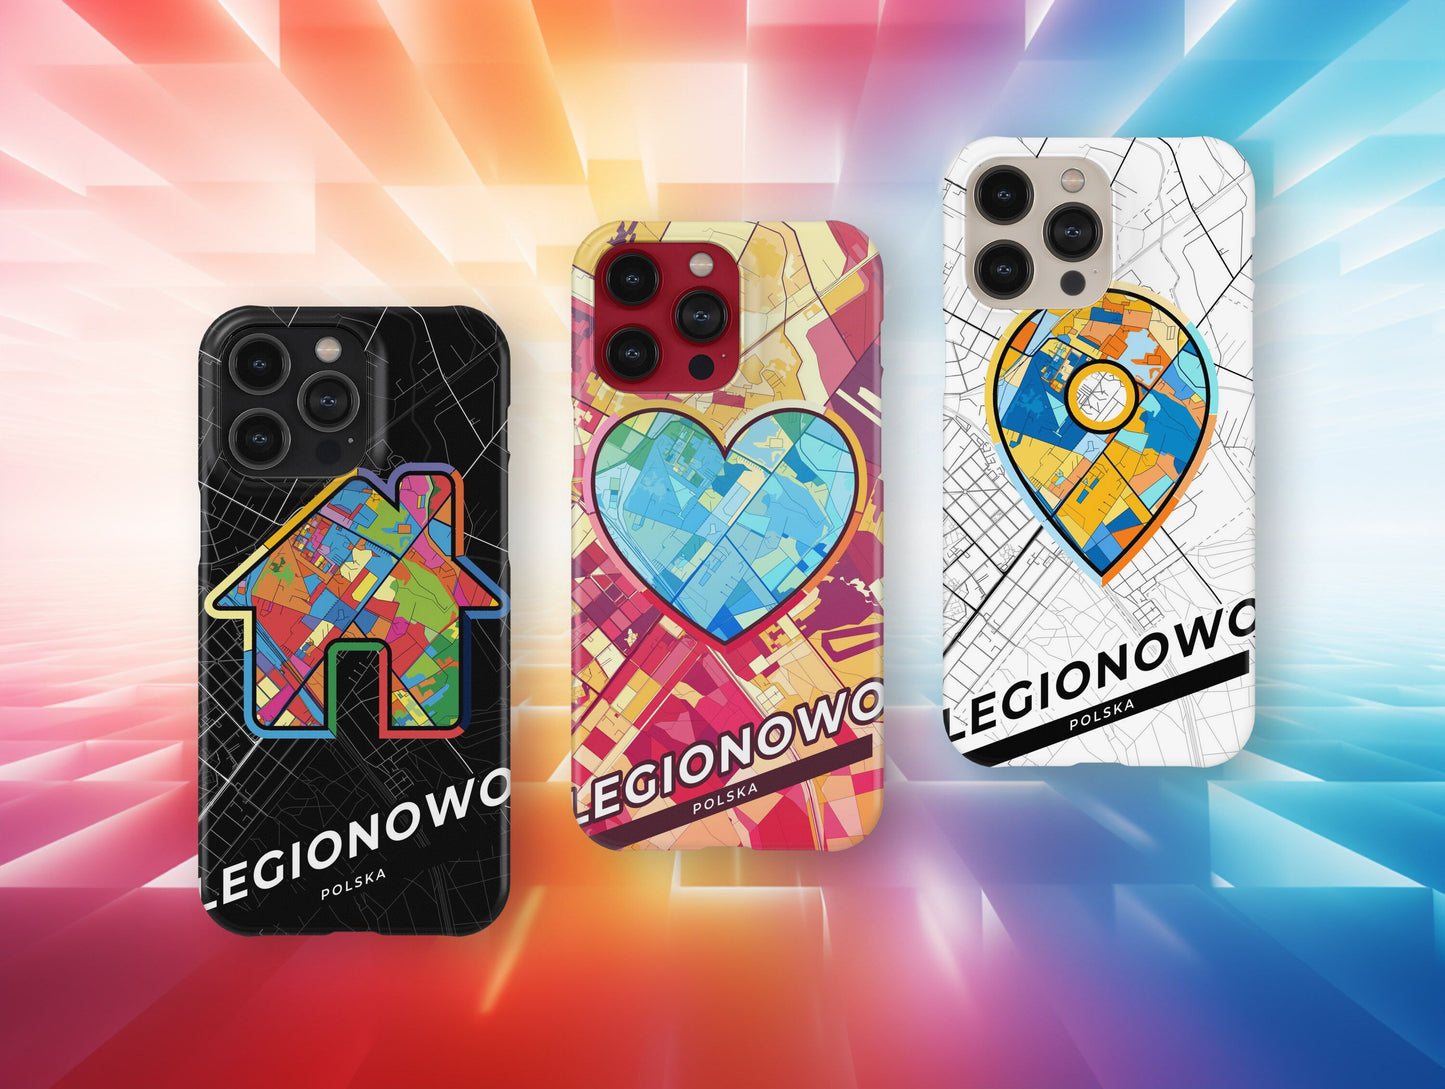 Legionowo Poland slim phone case with colorful icon. Birthday, wedding or housewarming gift. Couple match cases.